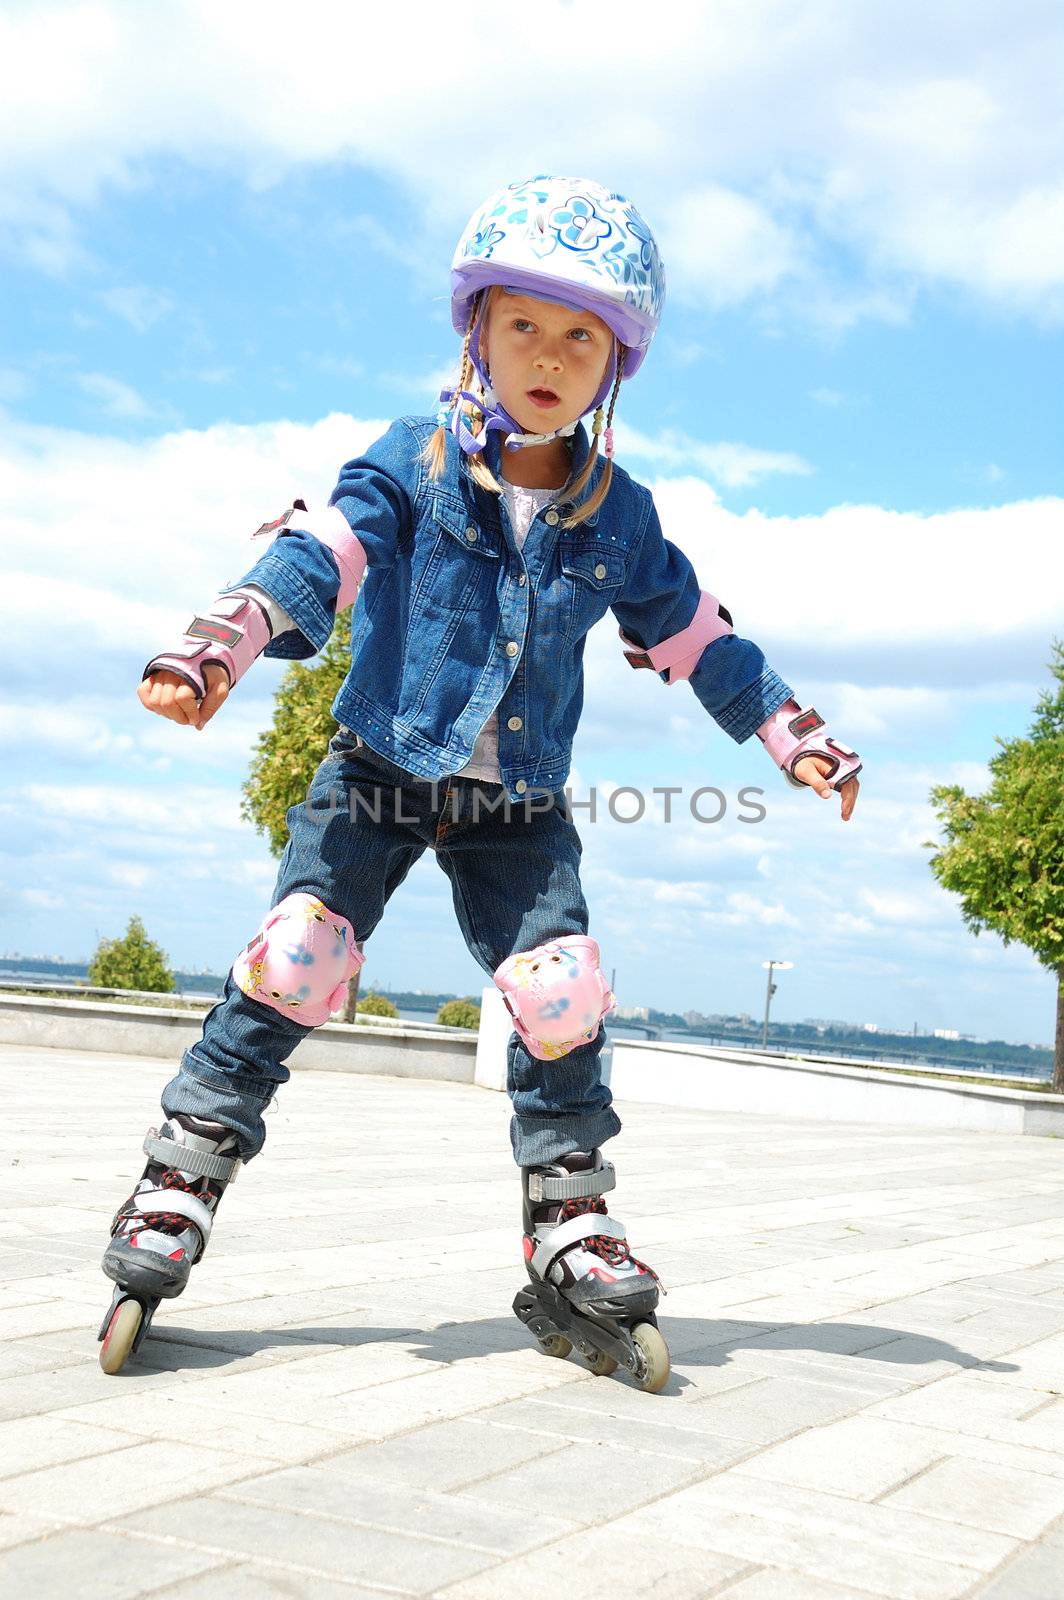 little girl doing her first steps in rollerblading